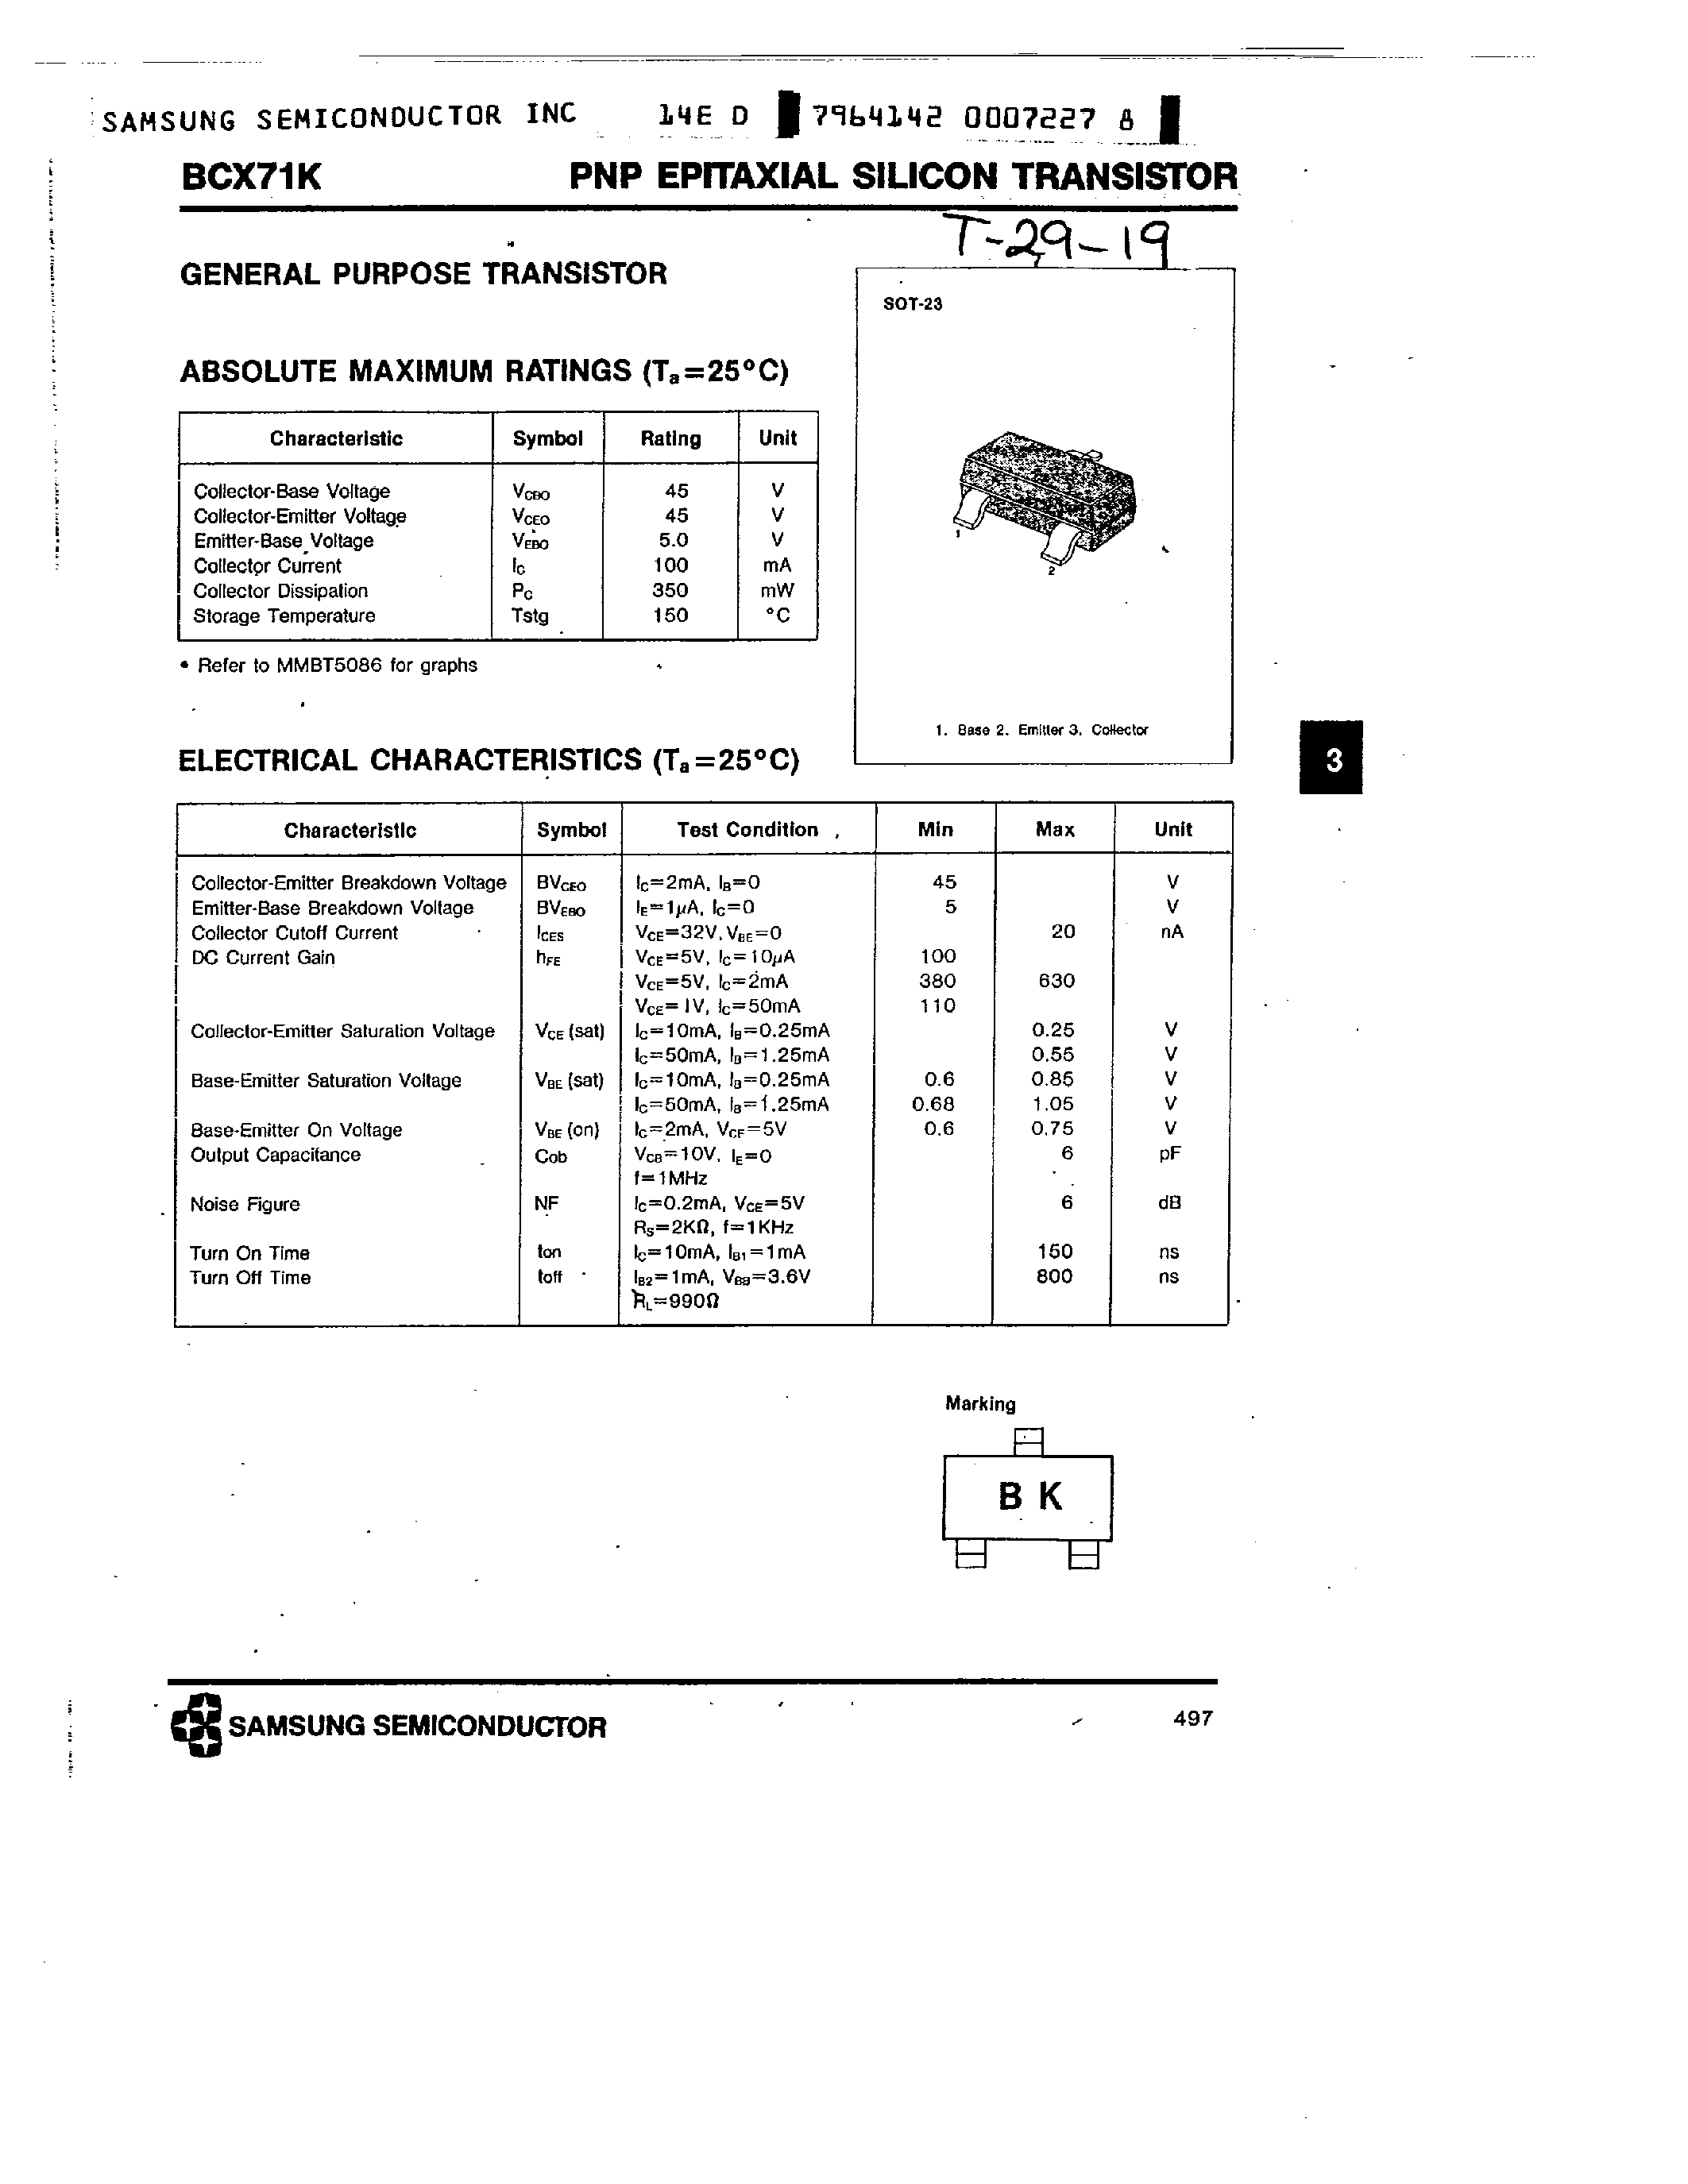 Datasheet BCX71K - PNP EPITAXIAL SILICON TRANSISTOR page 1